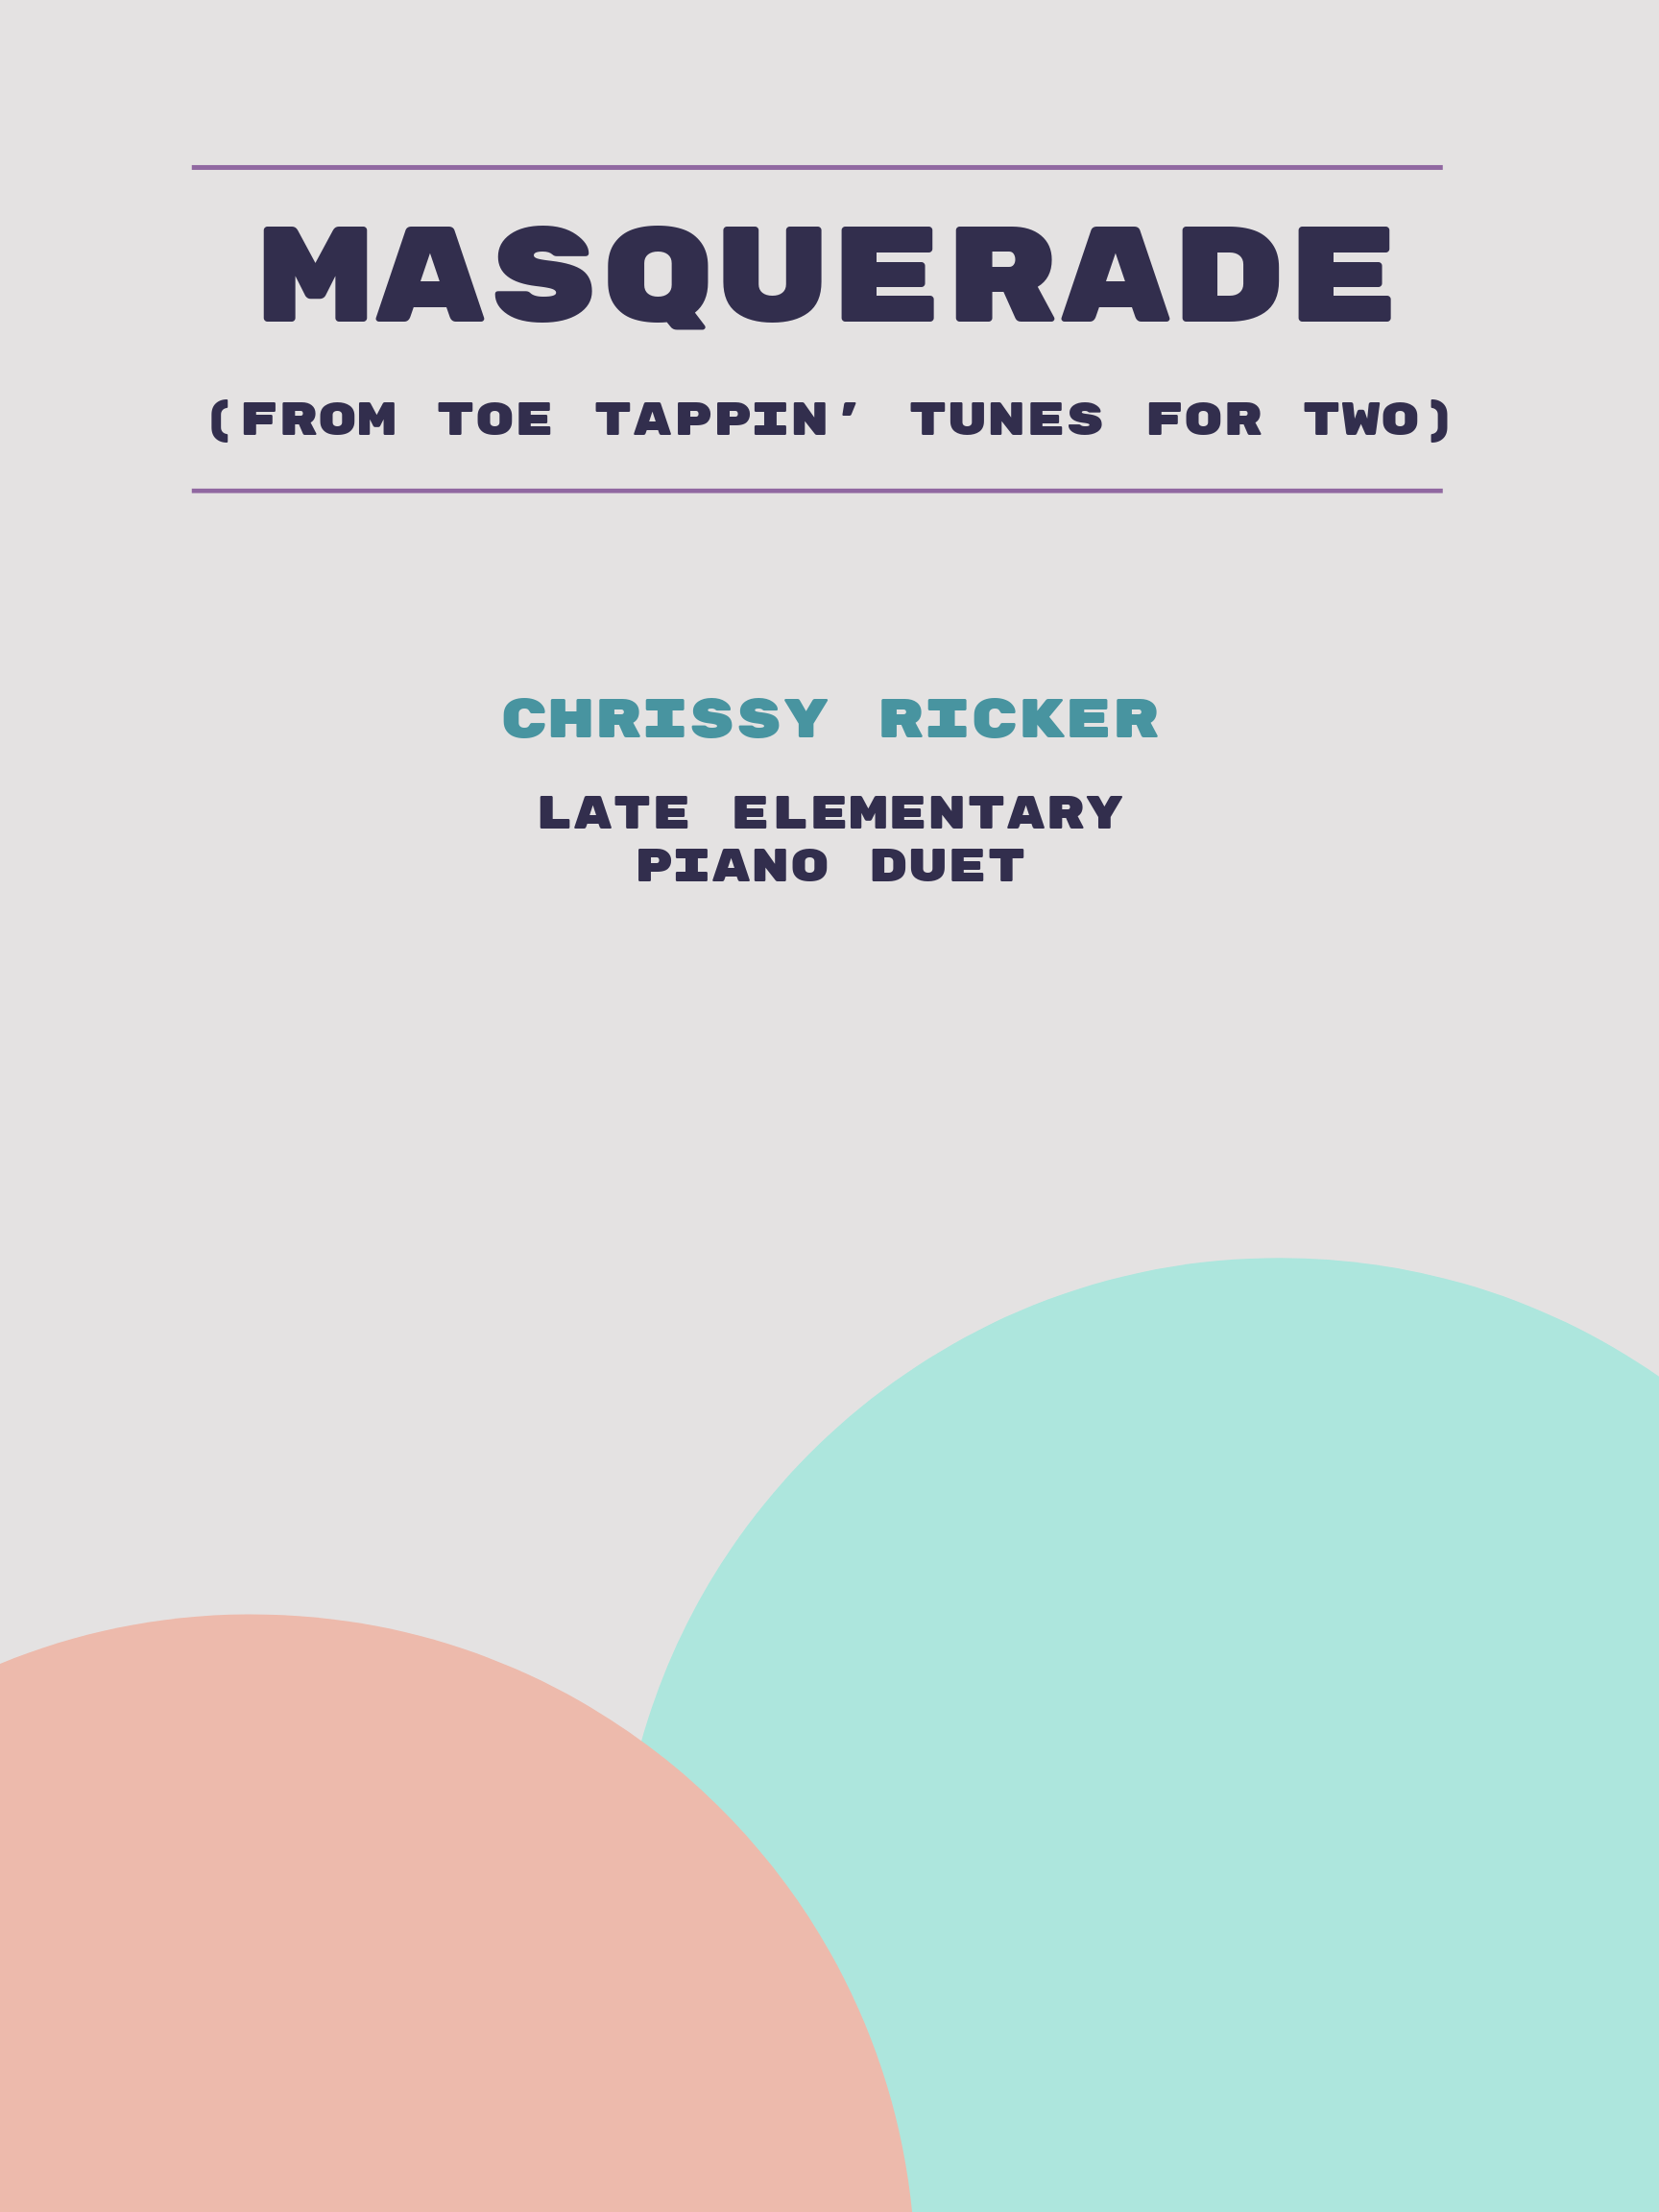 Masquerade by Chrissy Ricker